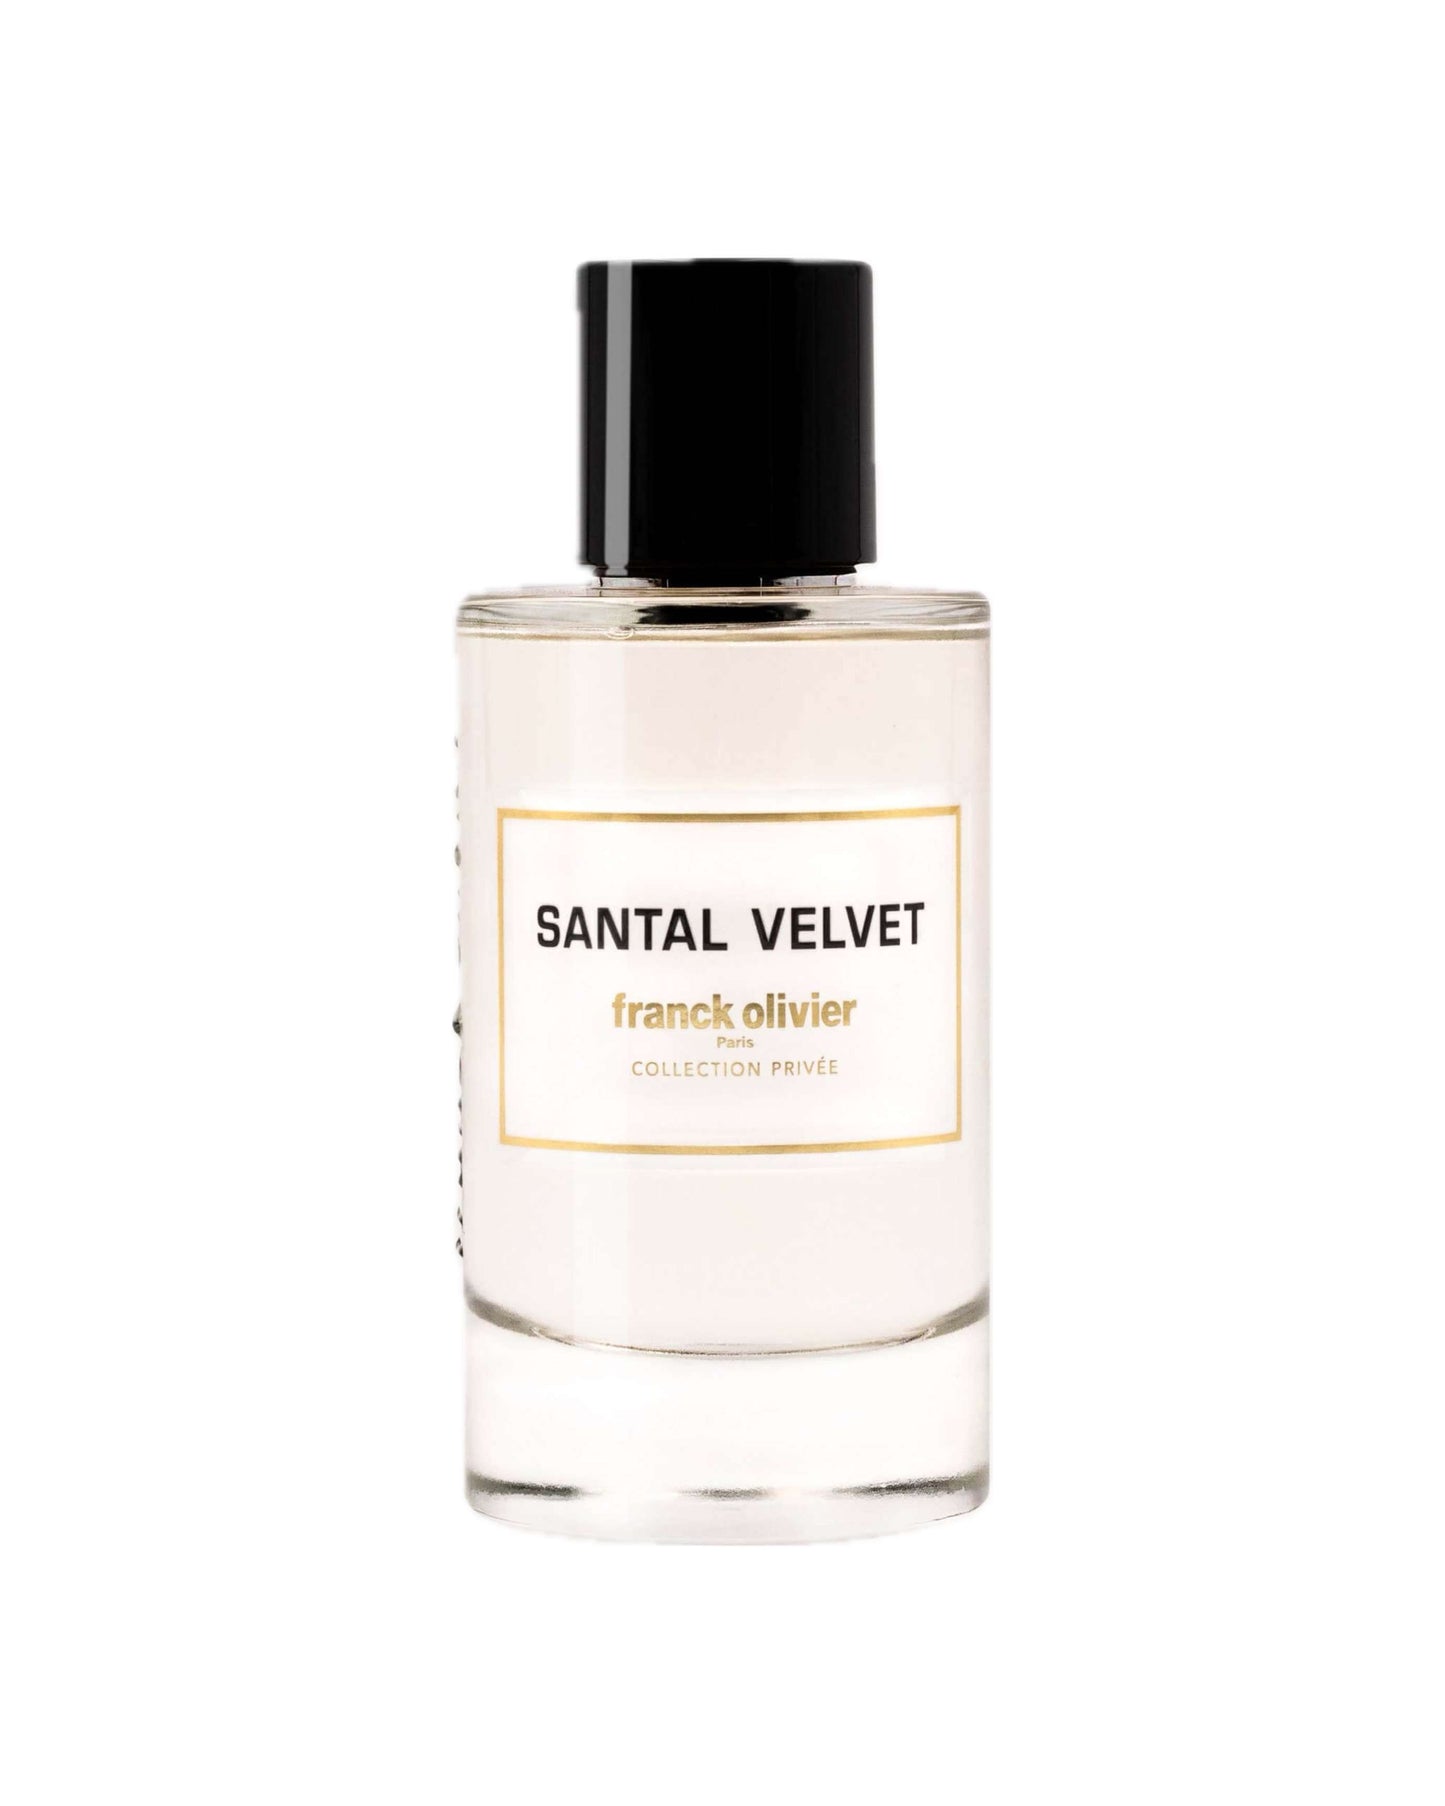 Franck Olivier – SANTAL VELVET–foryou–prix de foryou parfumurie en ligne–vente de parfum original au Maroc–prix de foryou parfum